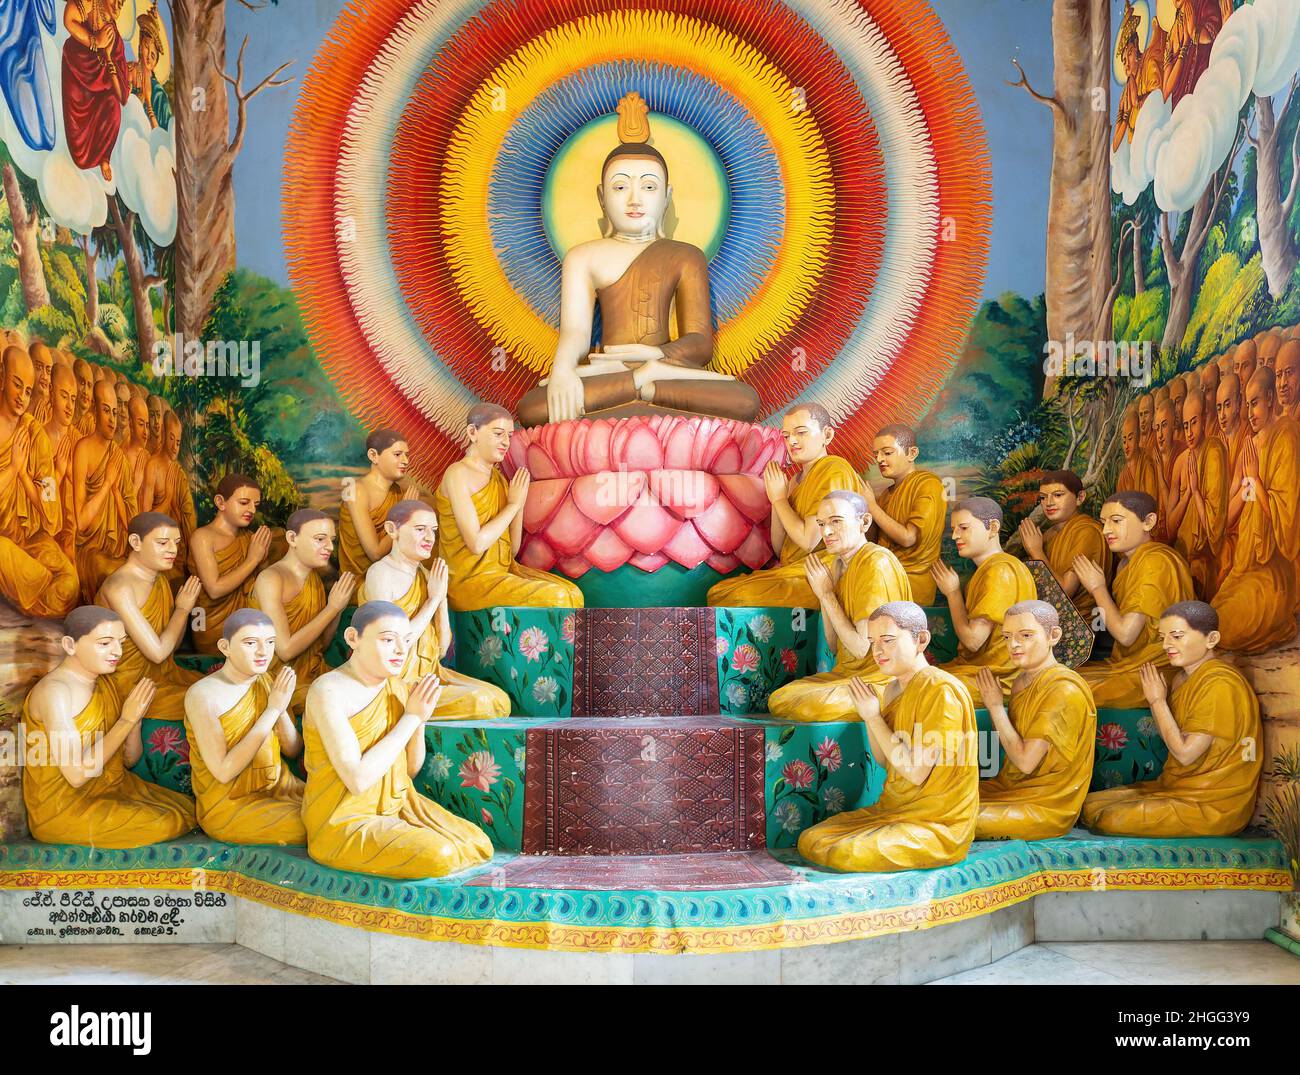 Diorama showing the sitting Buddha surrounded by his followers at Asokaramaya Buddhist Temple, Colombo, Sri Lanka, surrounded by followers. Stock Photo